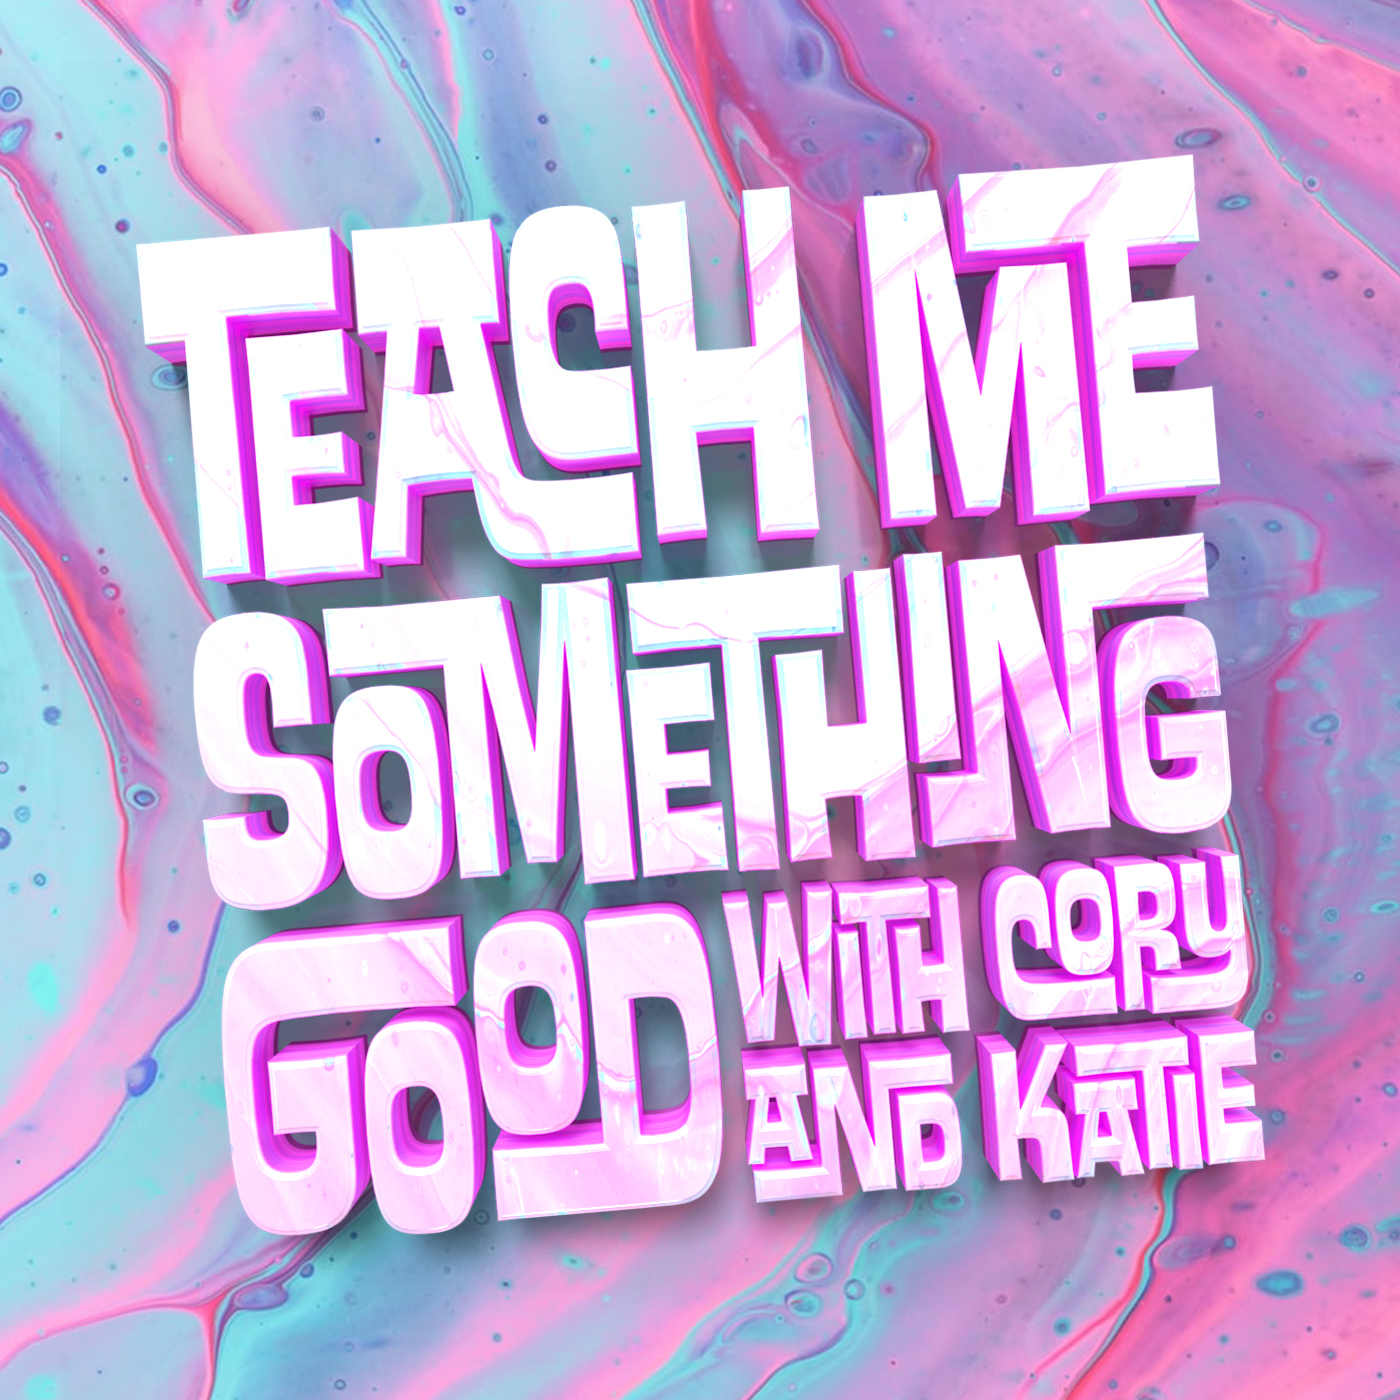 Teach Me Something Good